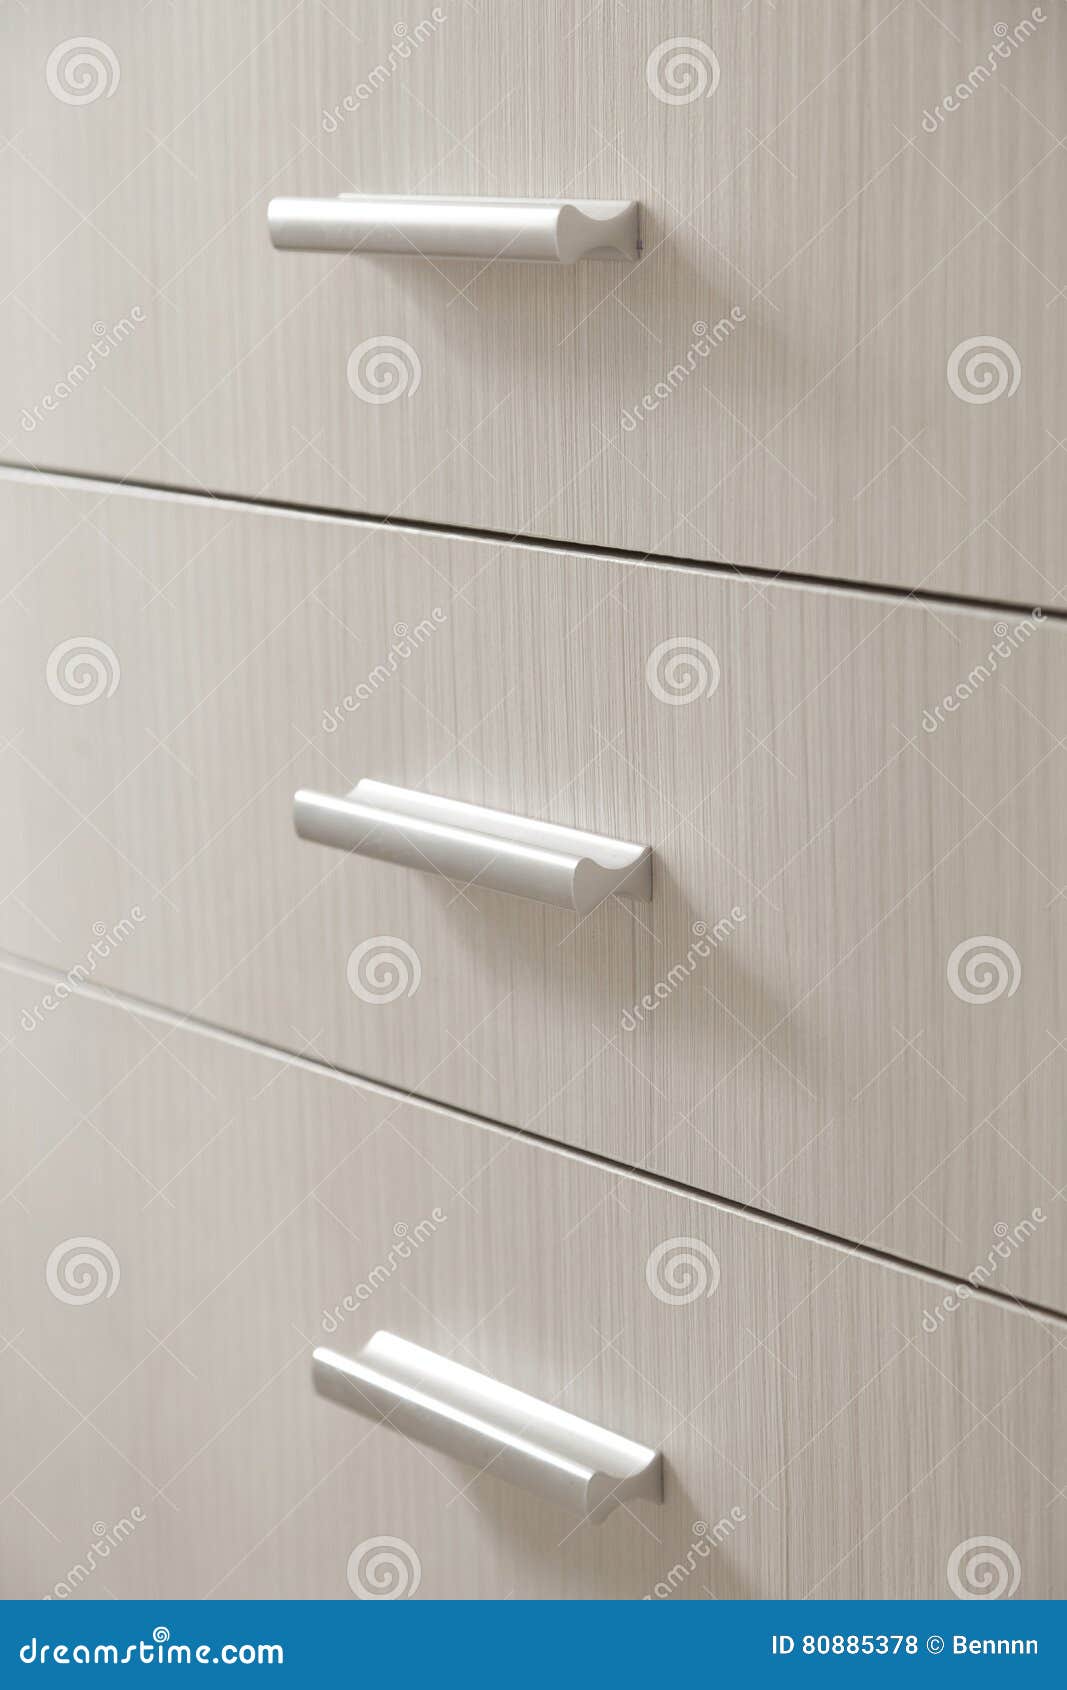 Kitchen Cabinet Door Knobs Stock Photo Image Of Drawer 80885378